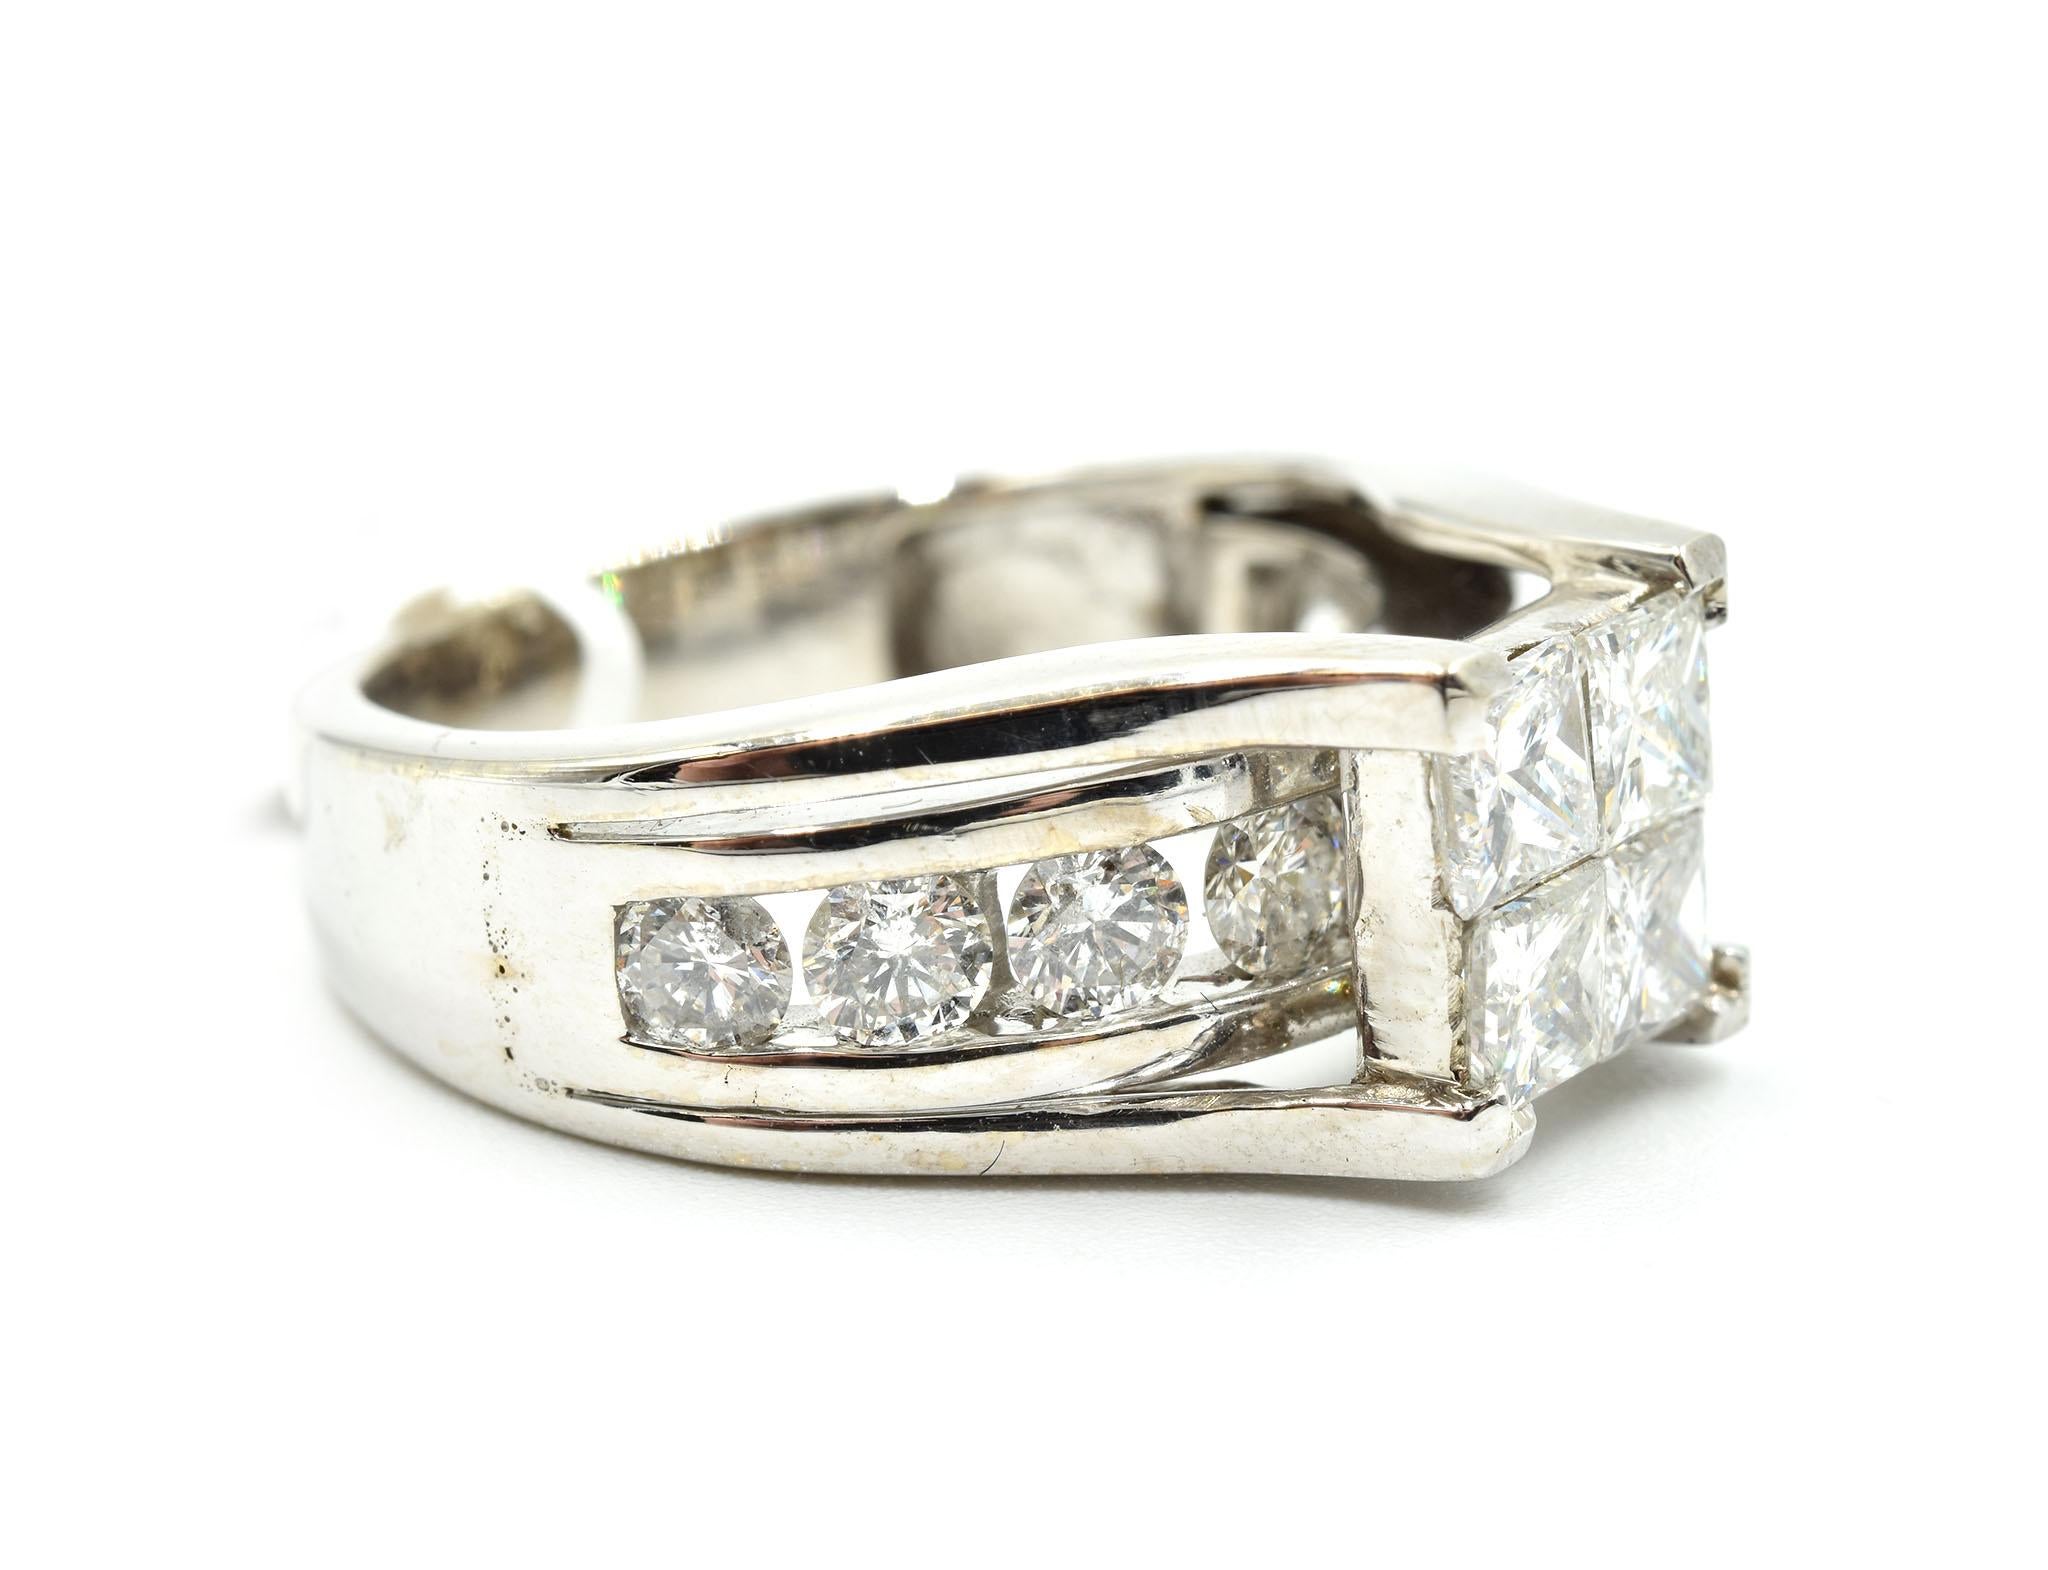 Designer: custom design
Material: 14k white gold
Diamonds: 13 princess cuts = 2.00cttw
Ring size: 6
Weight: 8 grams 
